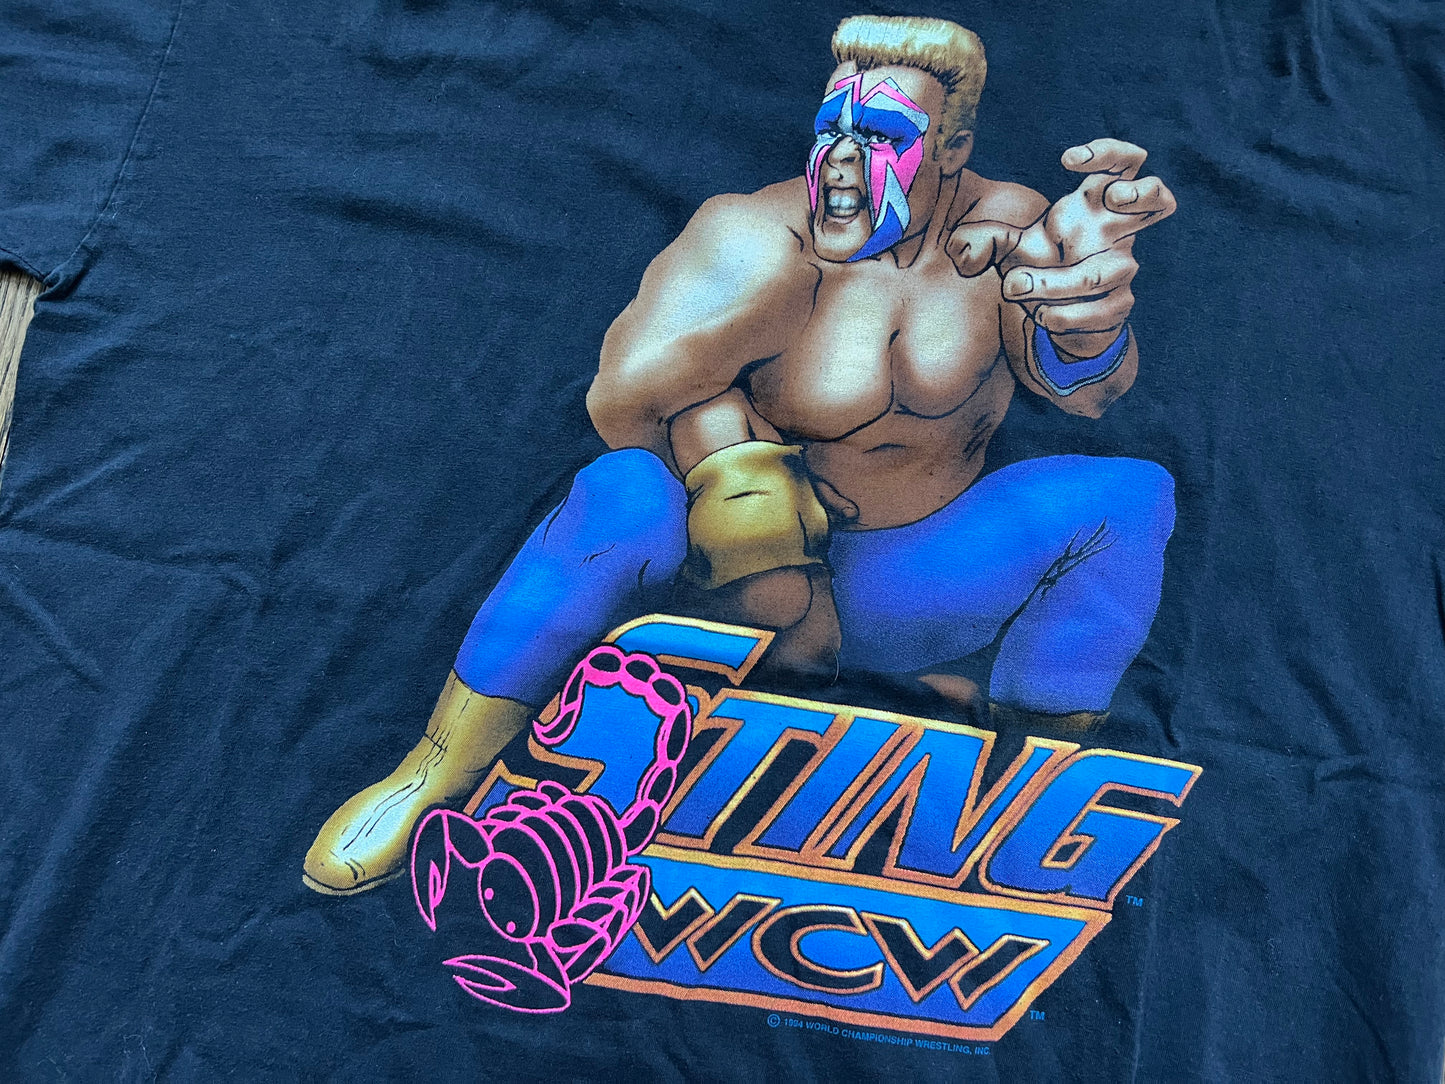 1994 WCW Sting “Scorpion Death Lock” shirt